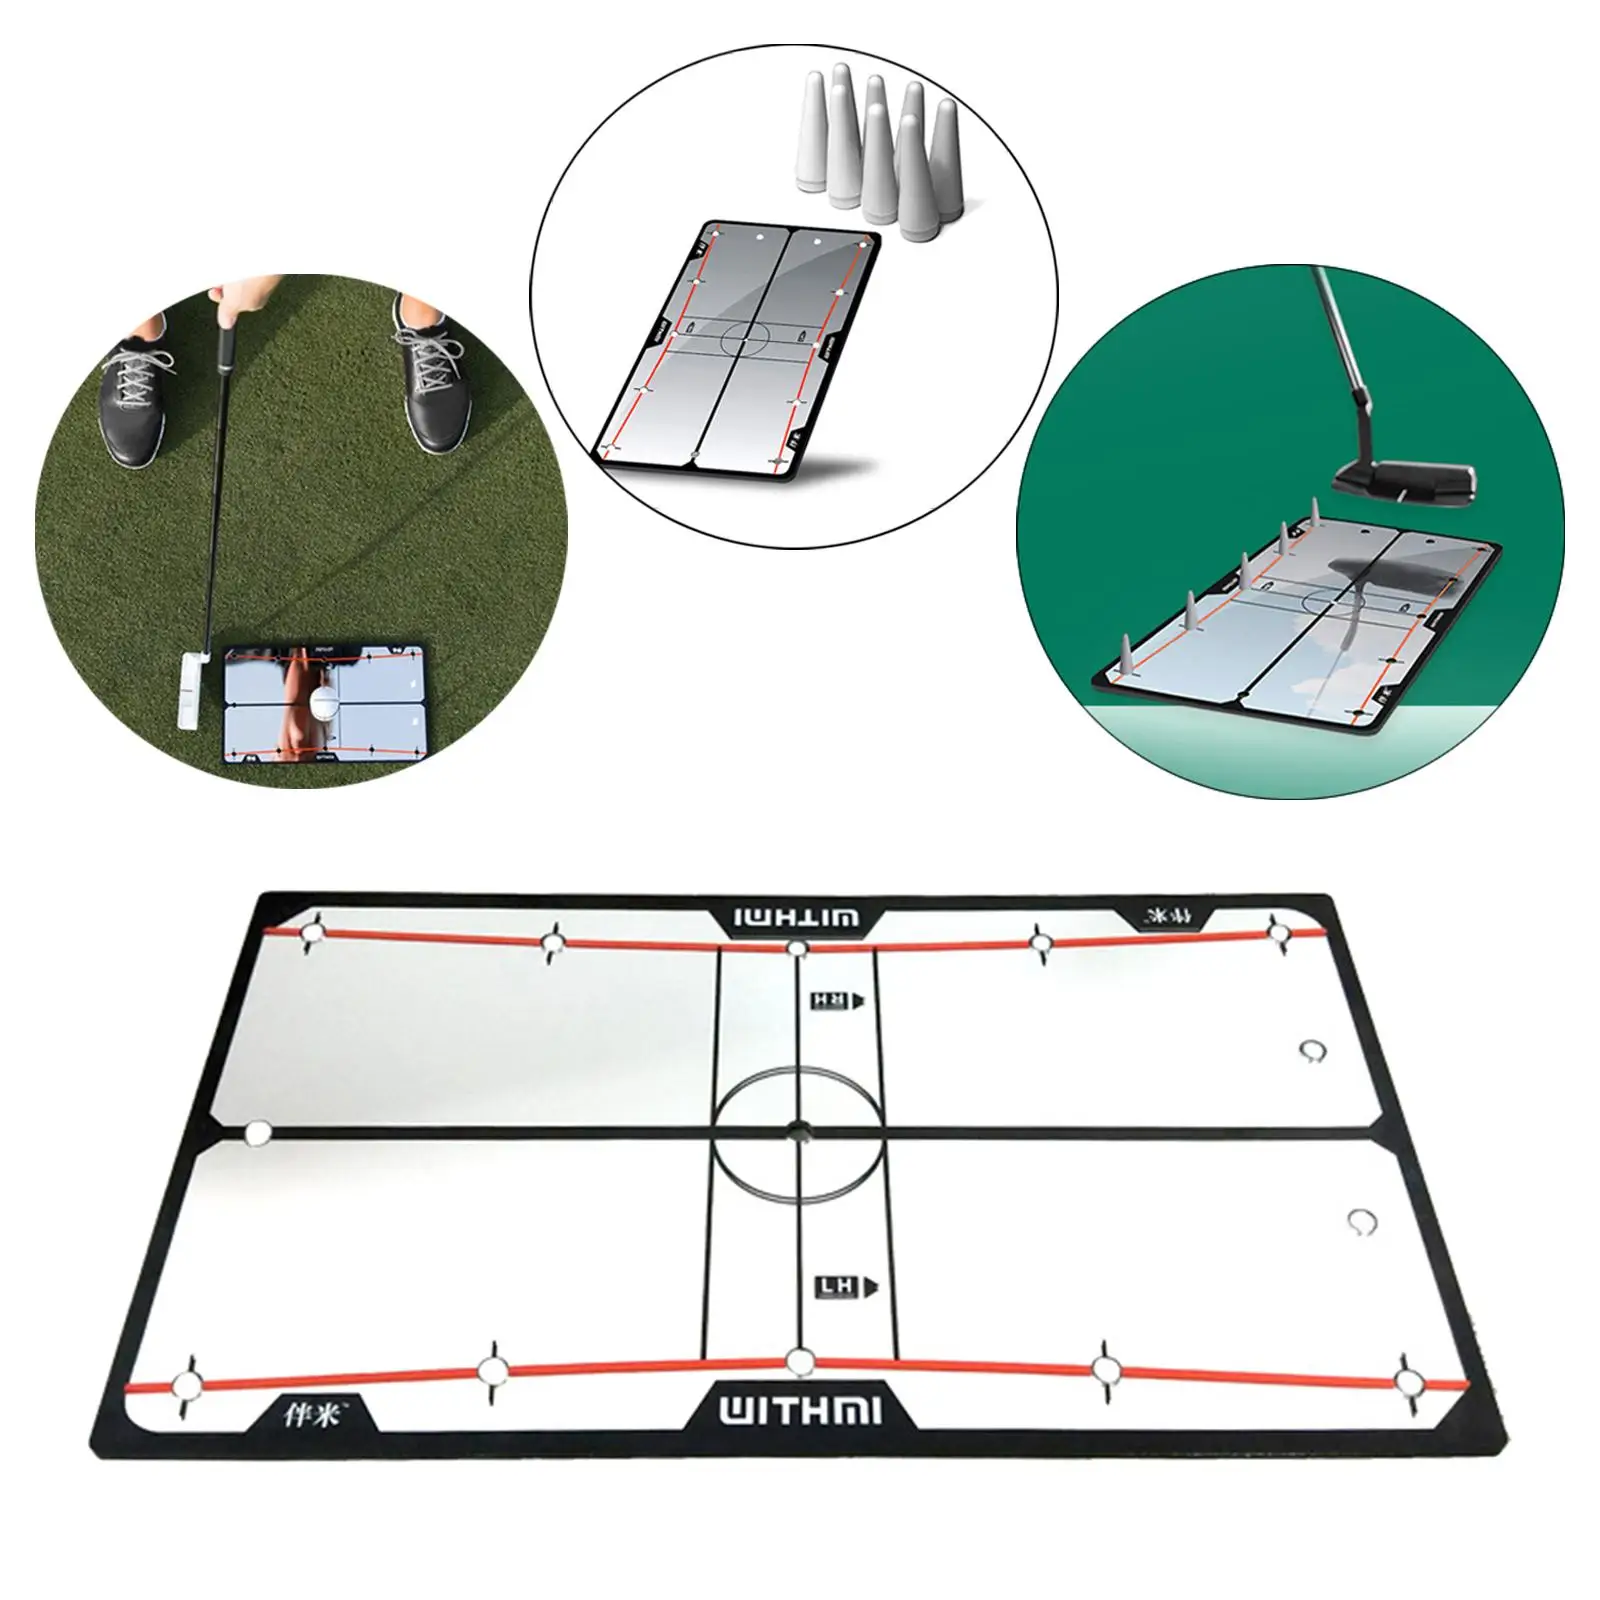 Alignment Alignment Mirror Compact Golf Putt Technique Accuracy Posture Practice Correcting Trainer for Indoor Outdoor Training